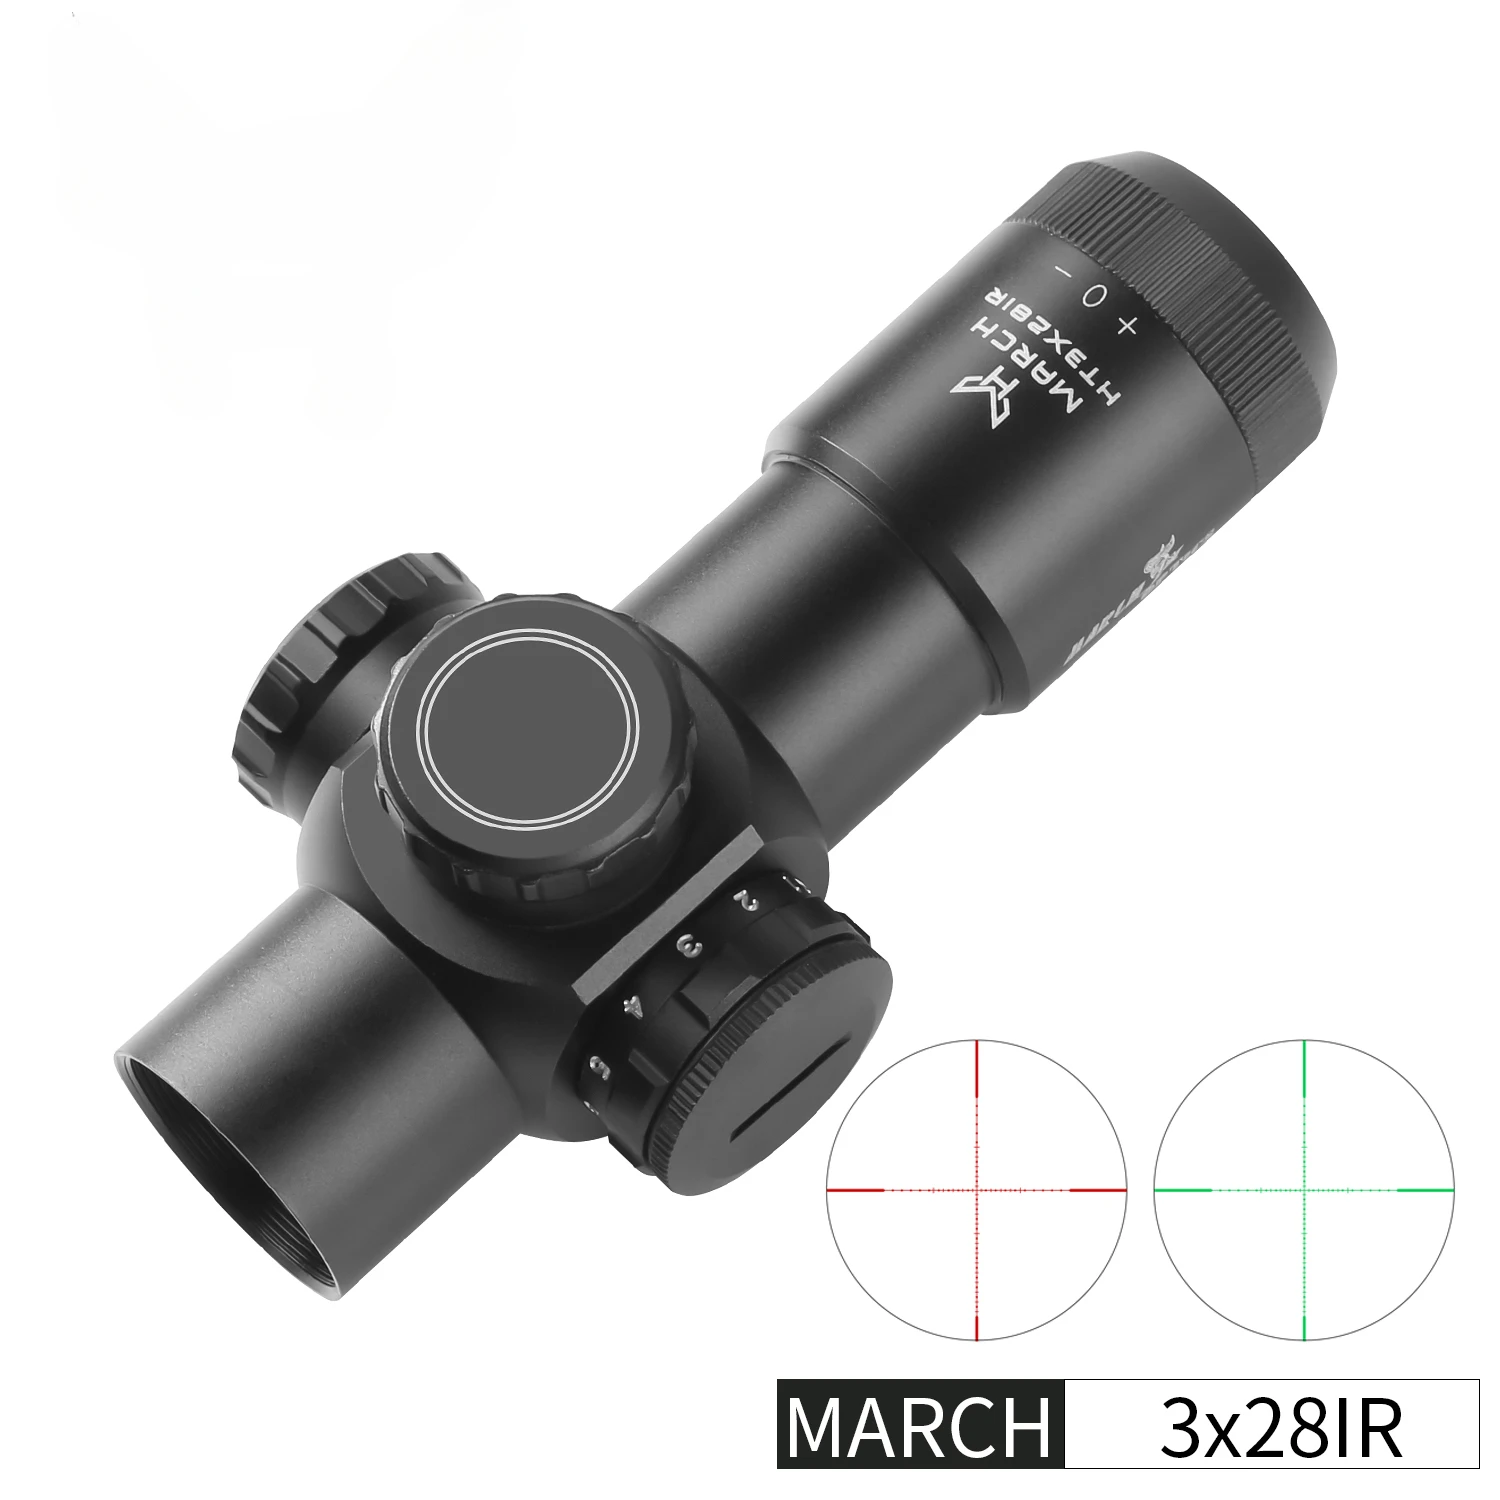 

HT 3X28IR Tactical Rifle Scope Hunting Sniper Airsoft Air Guns Red Dot With Mounts Optics Shooting Glock Gun Sight